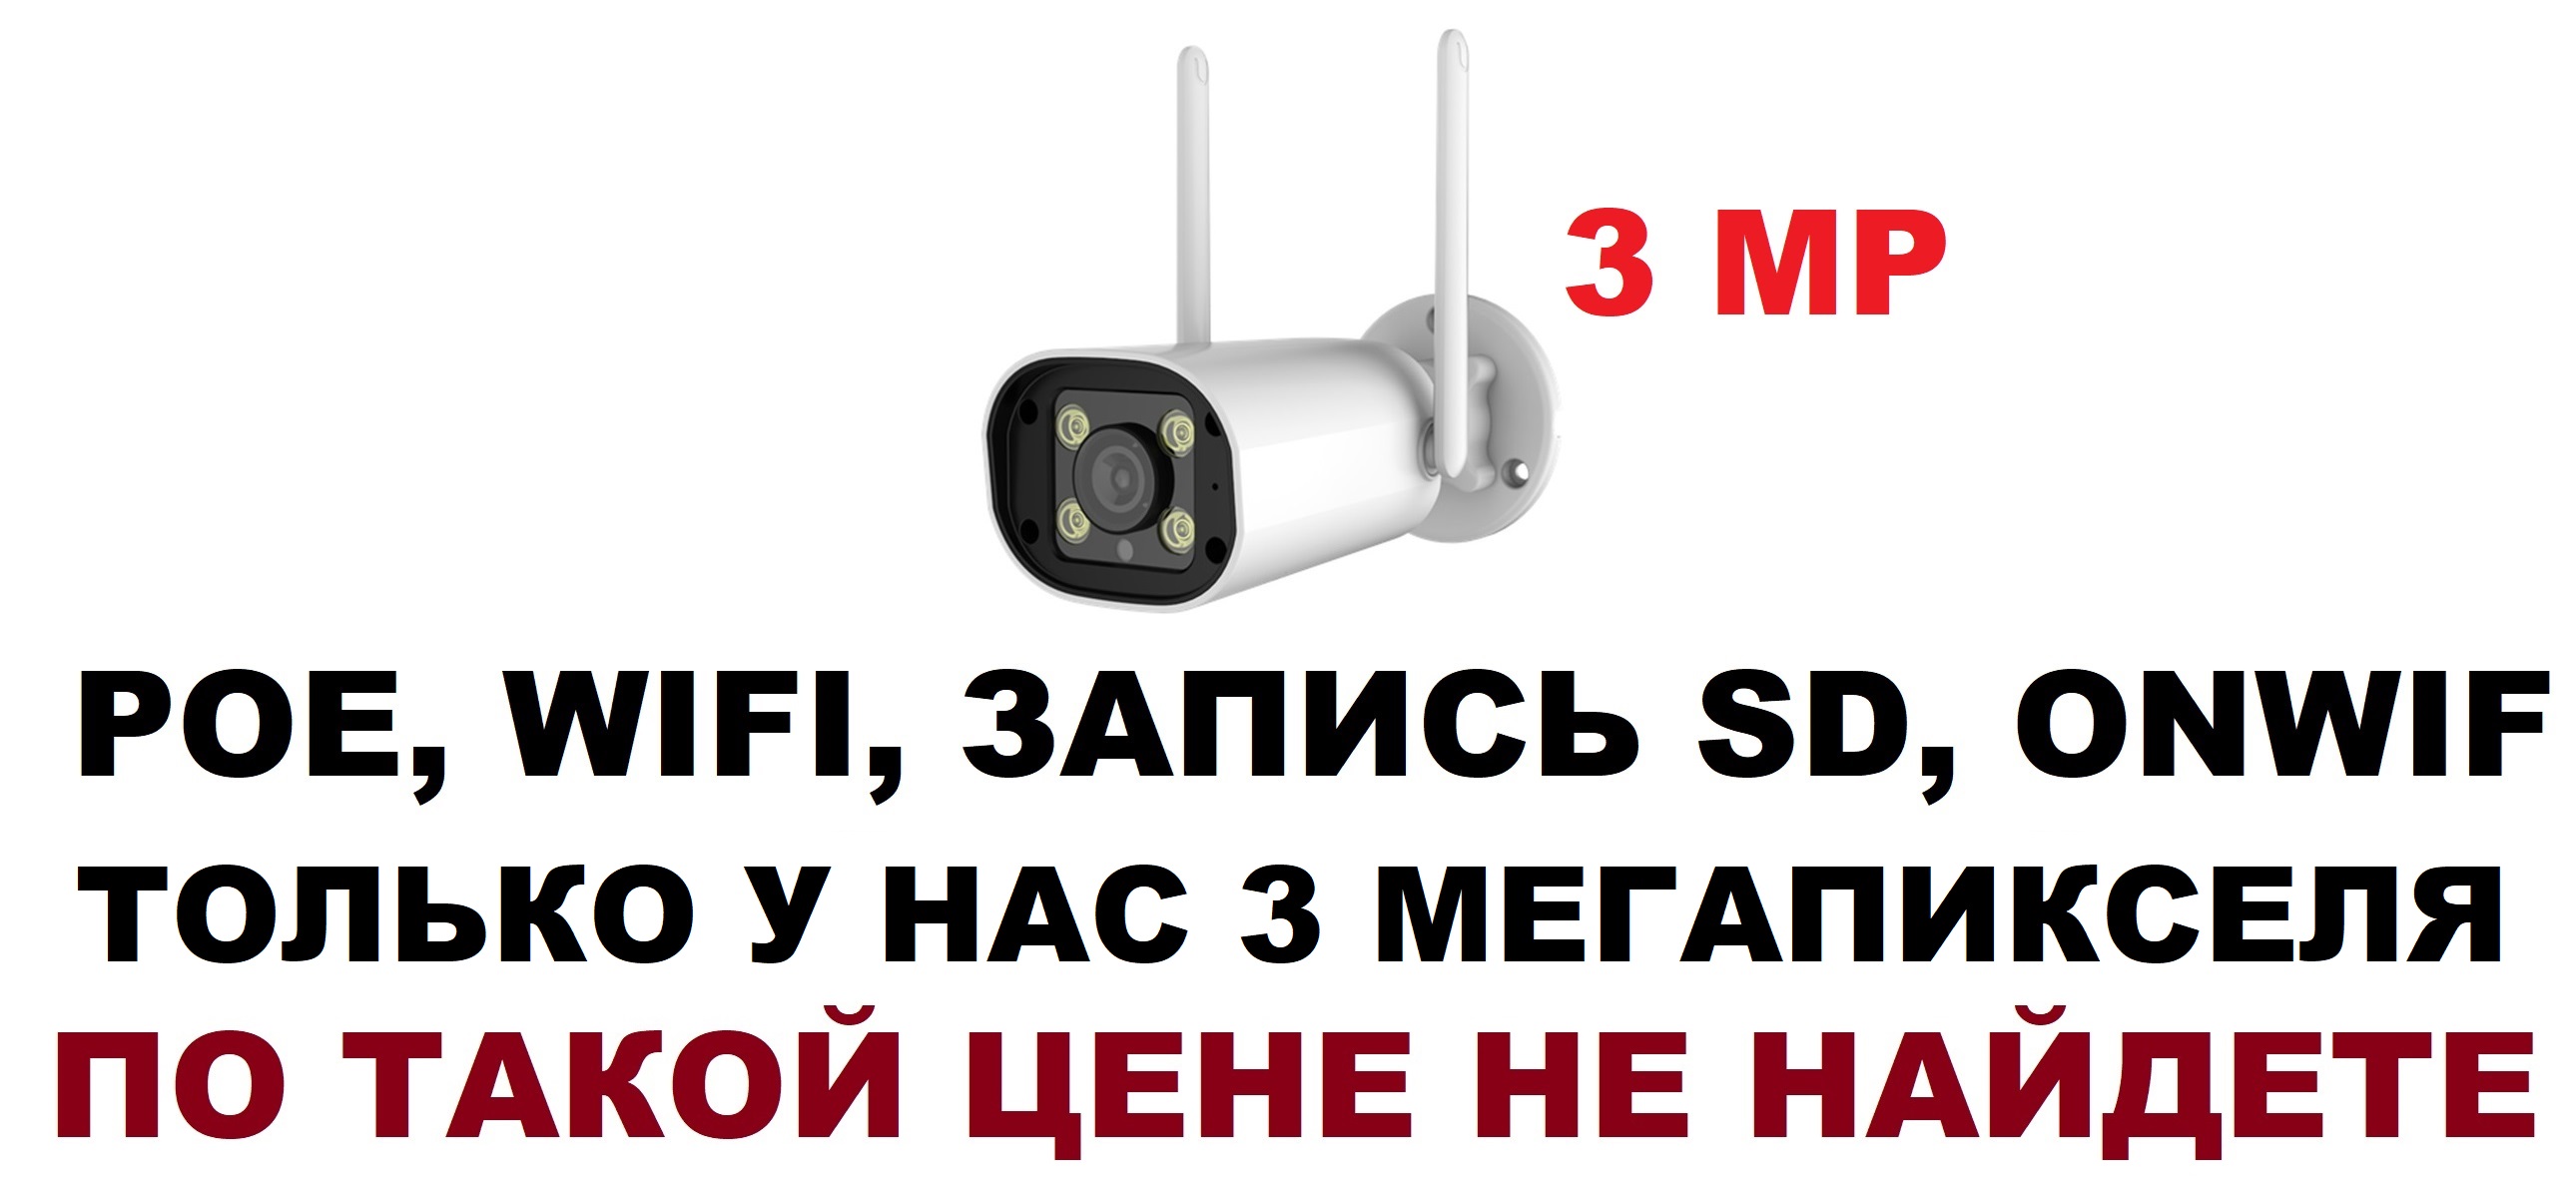 Уличная IP камера Wi-Fi видеокамера 3 MP запись на SD карта Onwif POE просмотр с телефона